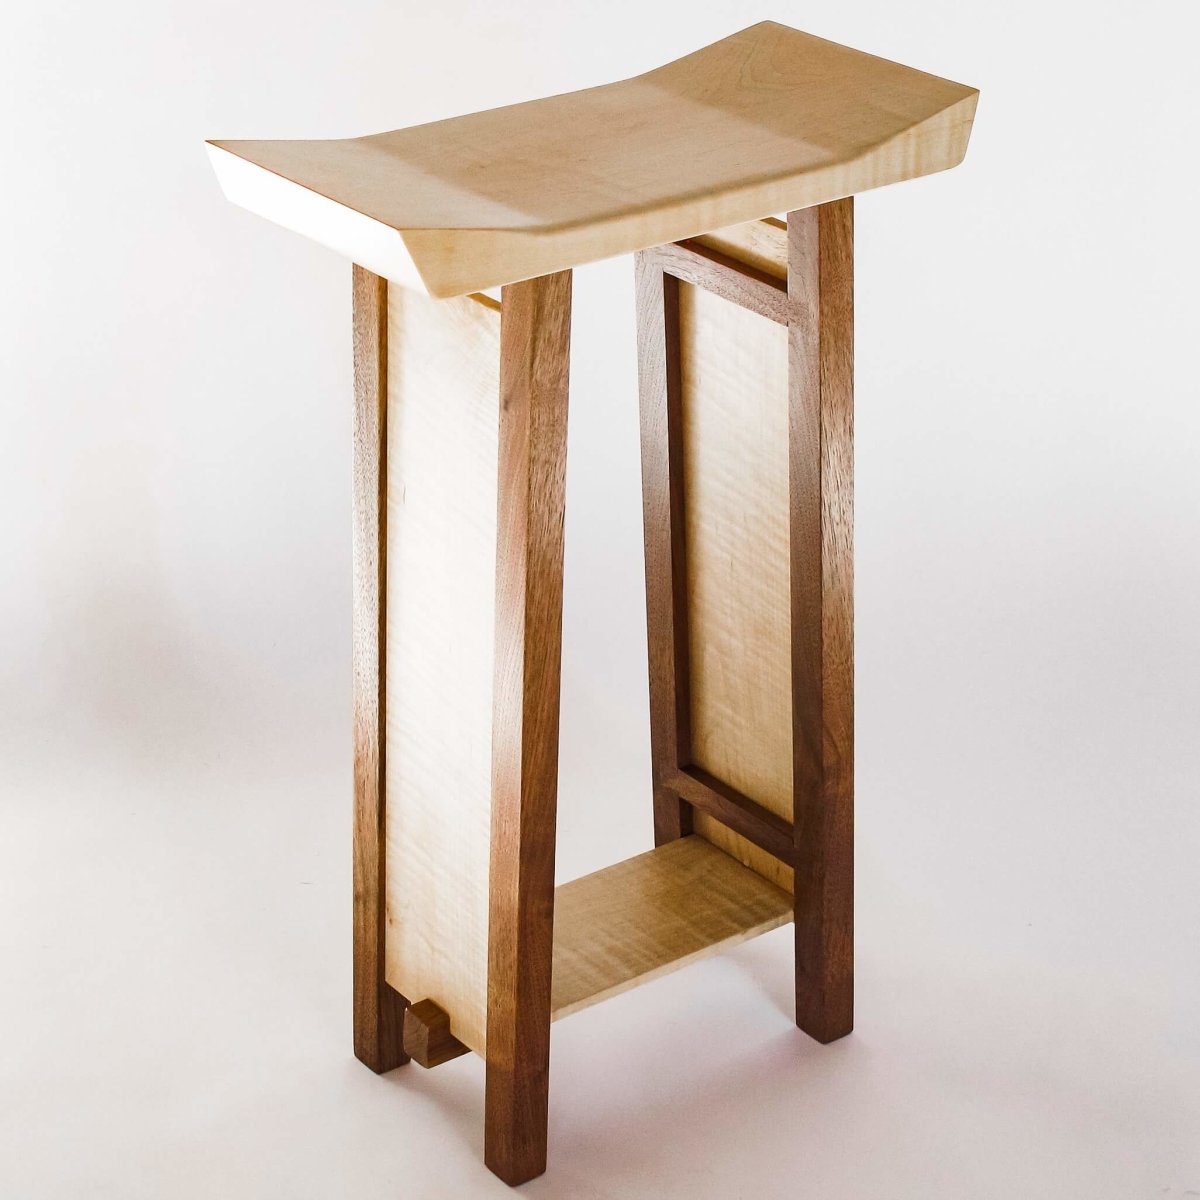 narrow barstools by Mokuzai Furniture